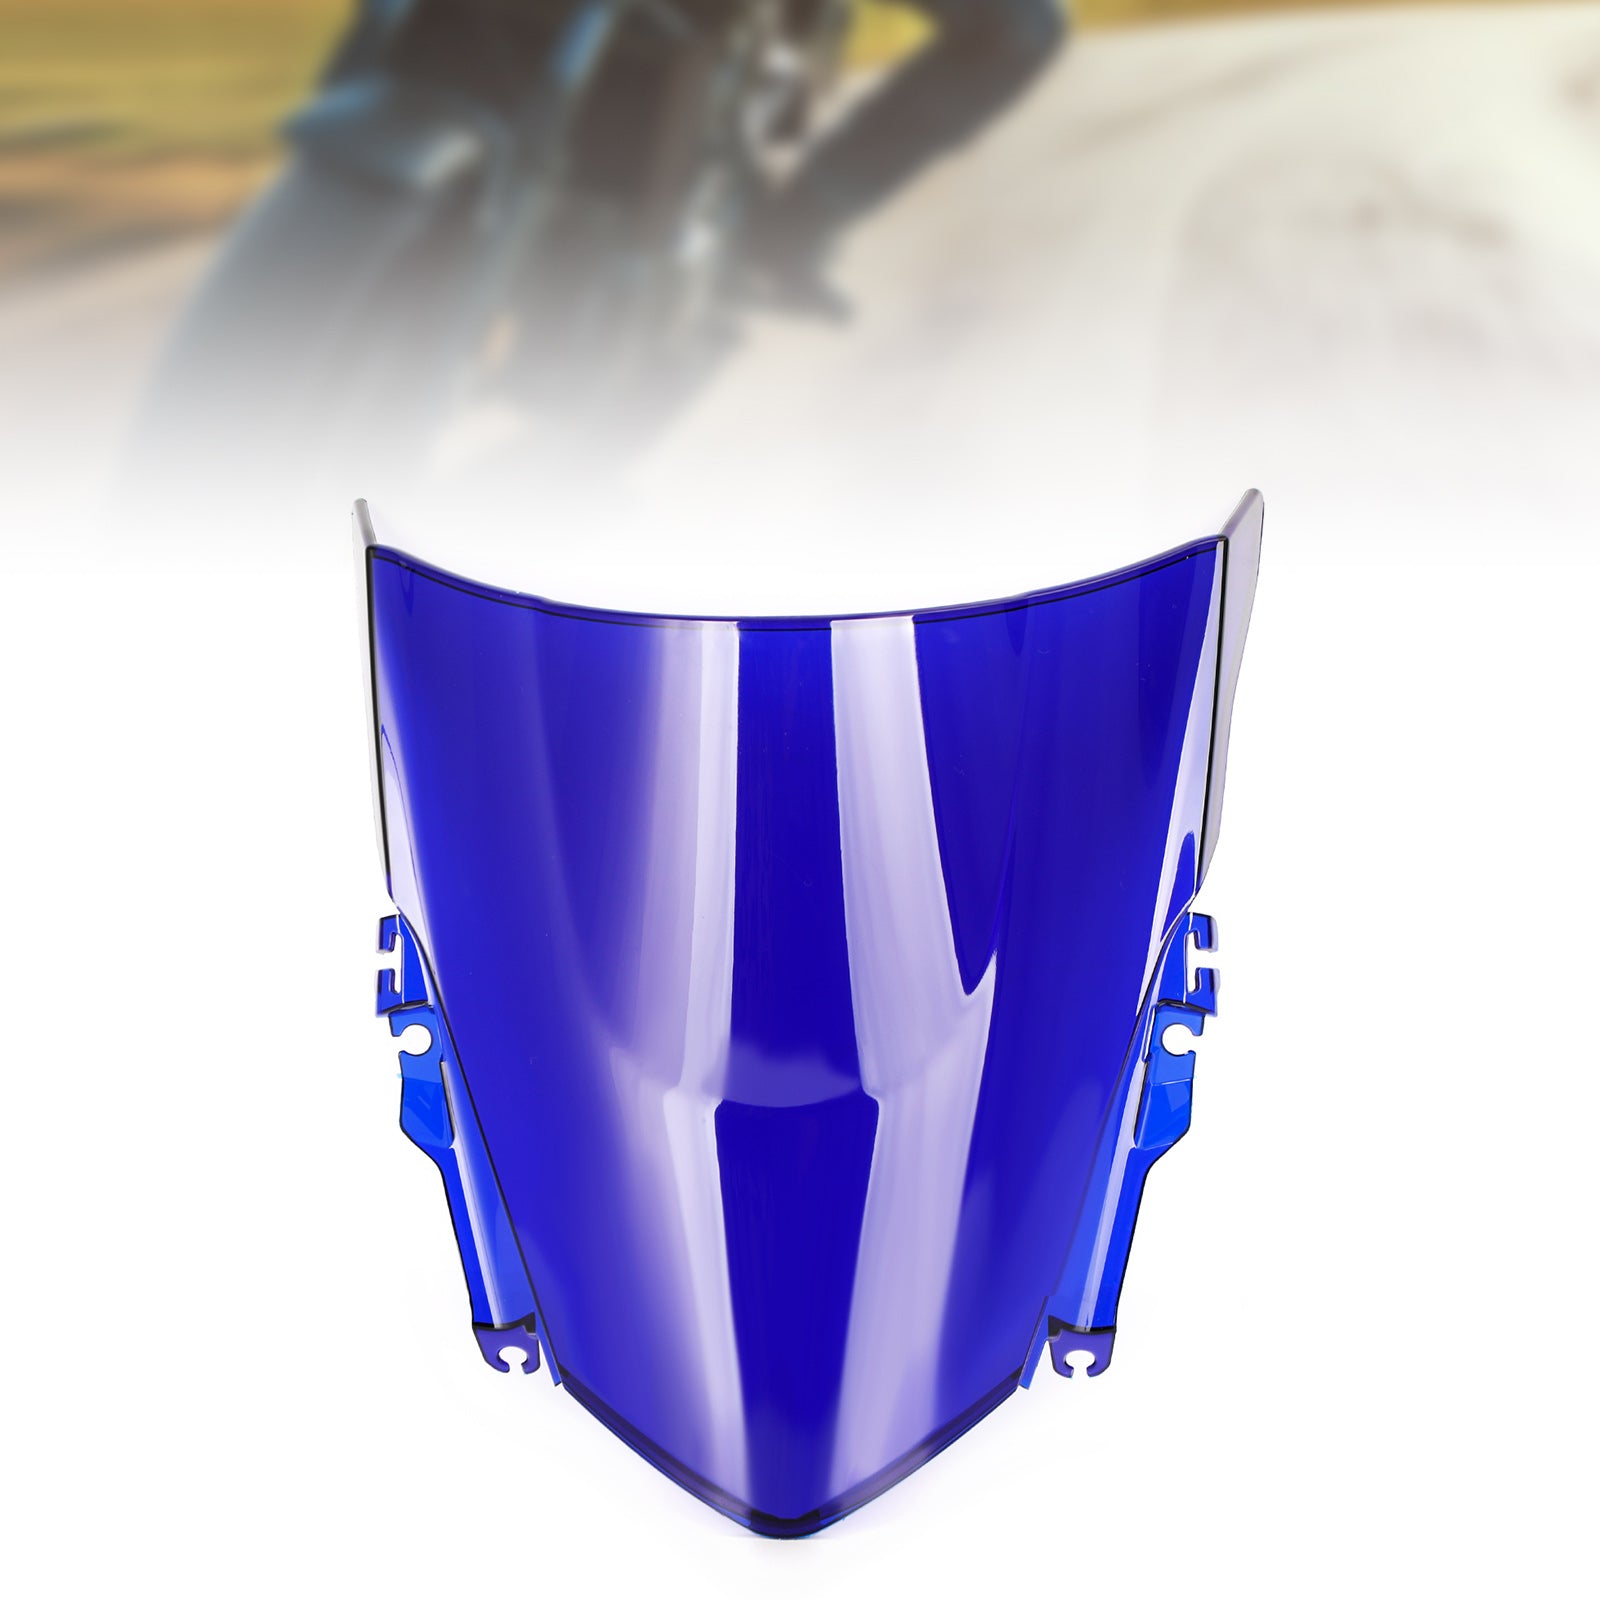 2013-2015 HONDA CBR500R ABS Motorcycle Windshield WindScreen